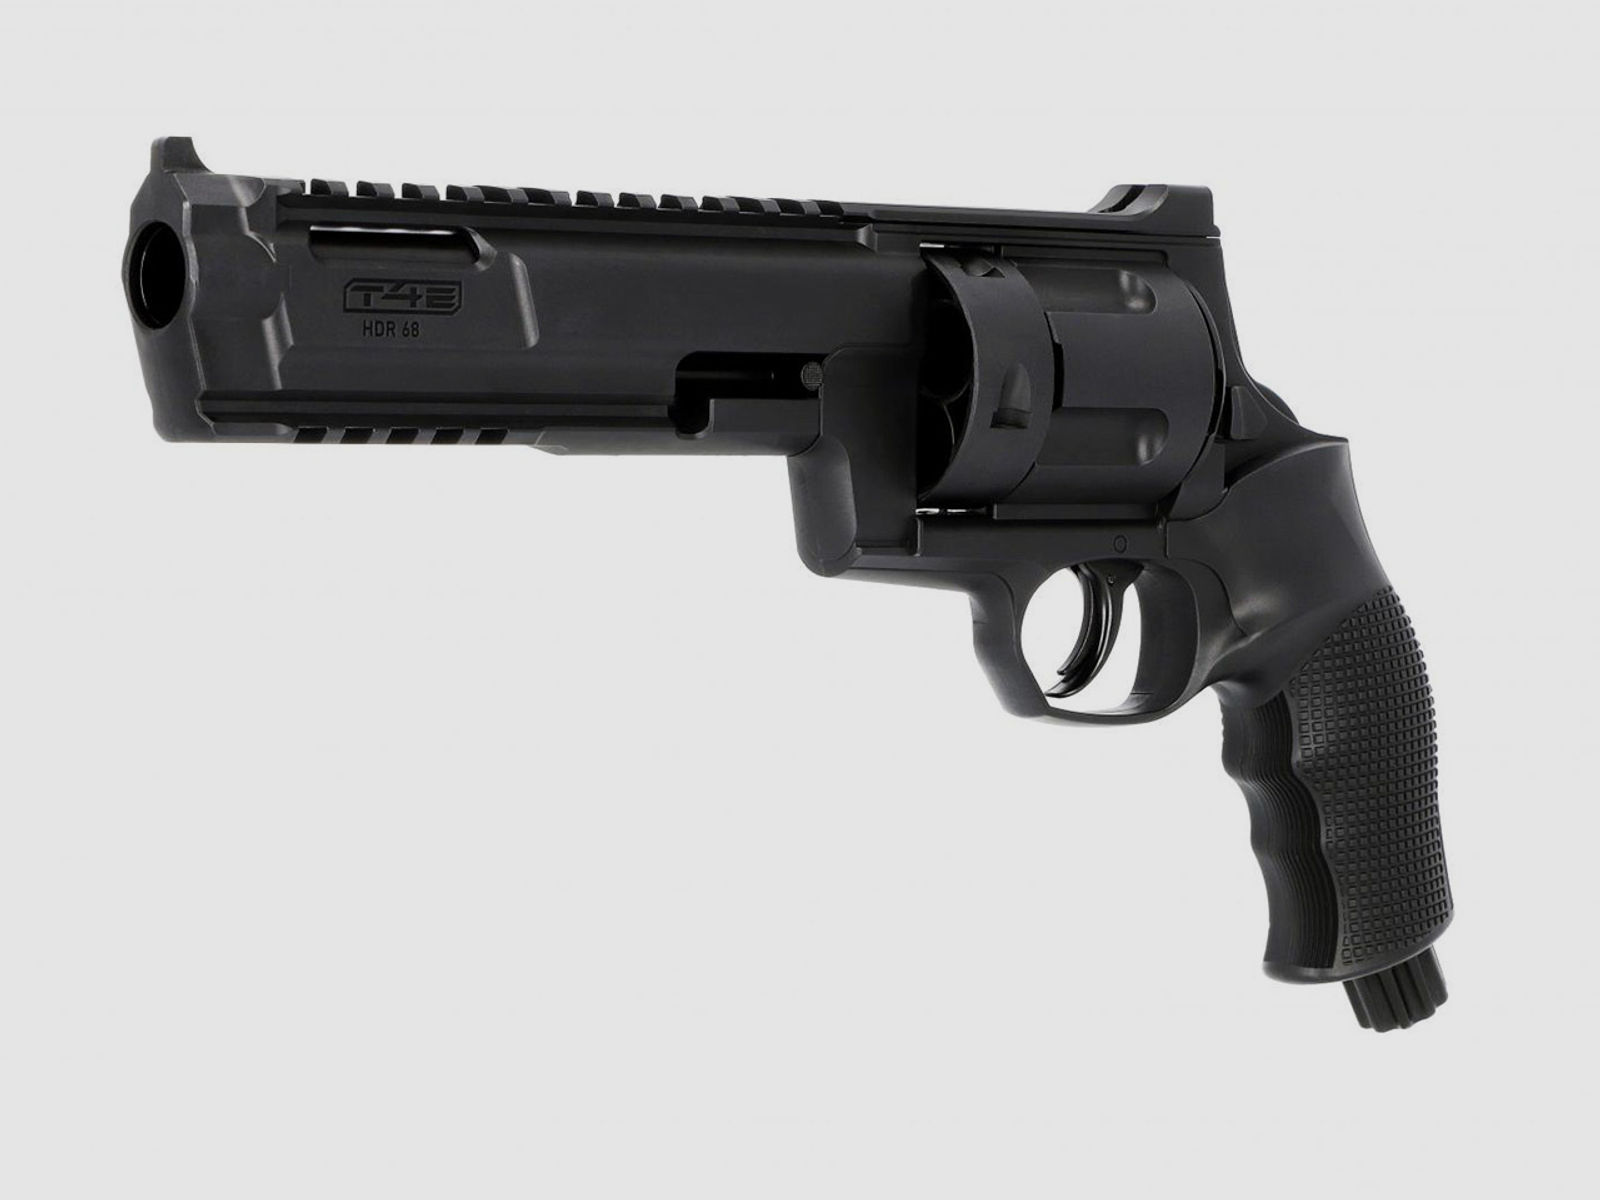 CO2 Markierer Home Defense Revolver Umarex T4E HDR 68 fĂĽr Gummi-, Pfeffer- und Farbkugeln Kaliber .68 (P18)